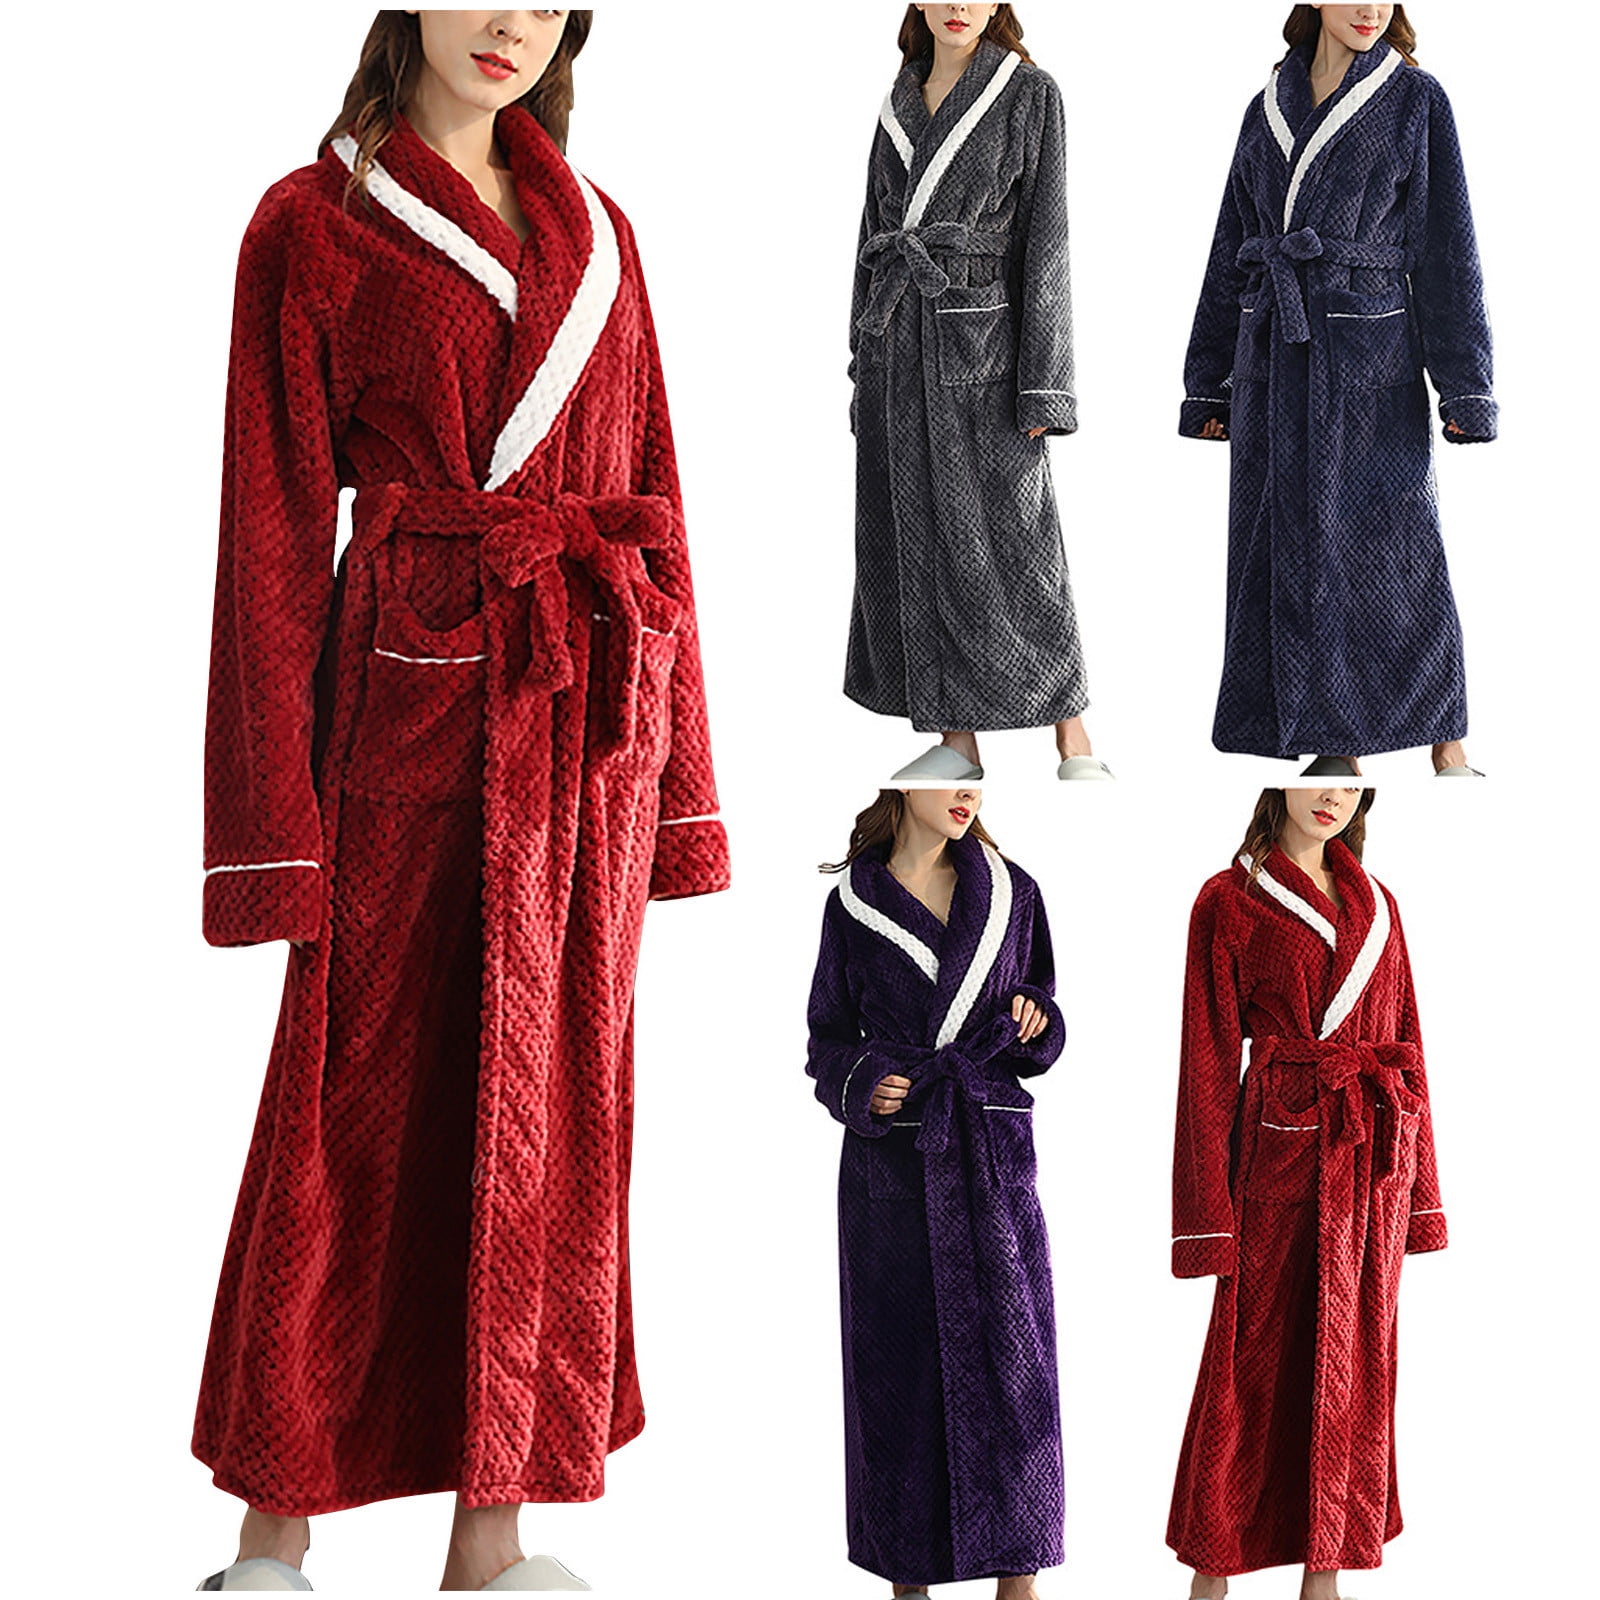 Winter Clearance Sale! pstuiky Robe, Women Solid Color Double-Sided Fleece  Homewear Winter Warm Robe Pajamas Bathrobe Leisure Hot Pink #1 L -  Walmart.com